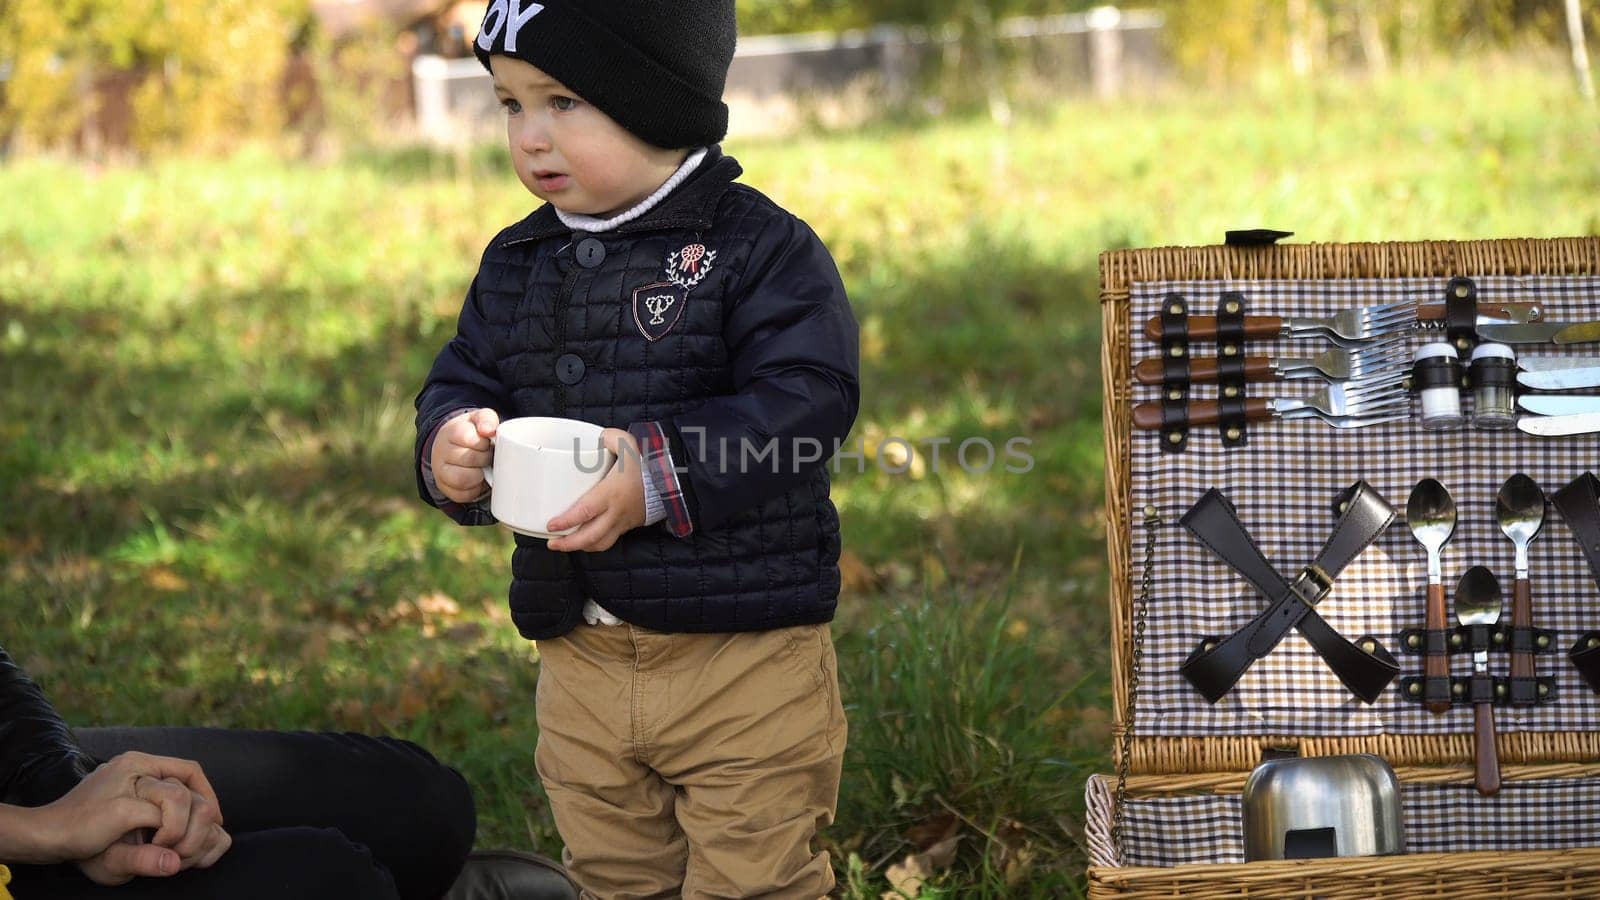 Little boy in the park on a picnic. Cute little boy in the park with a basket for a picnic.